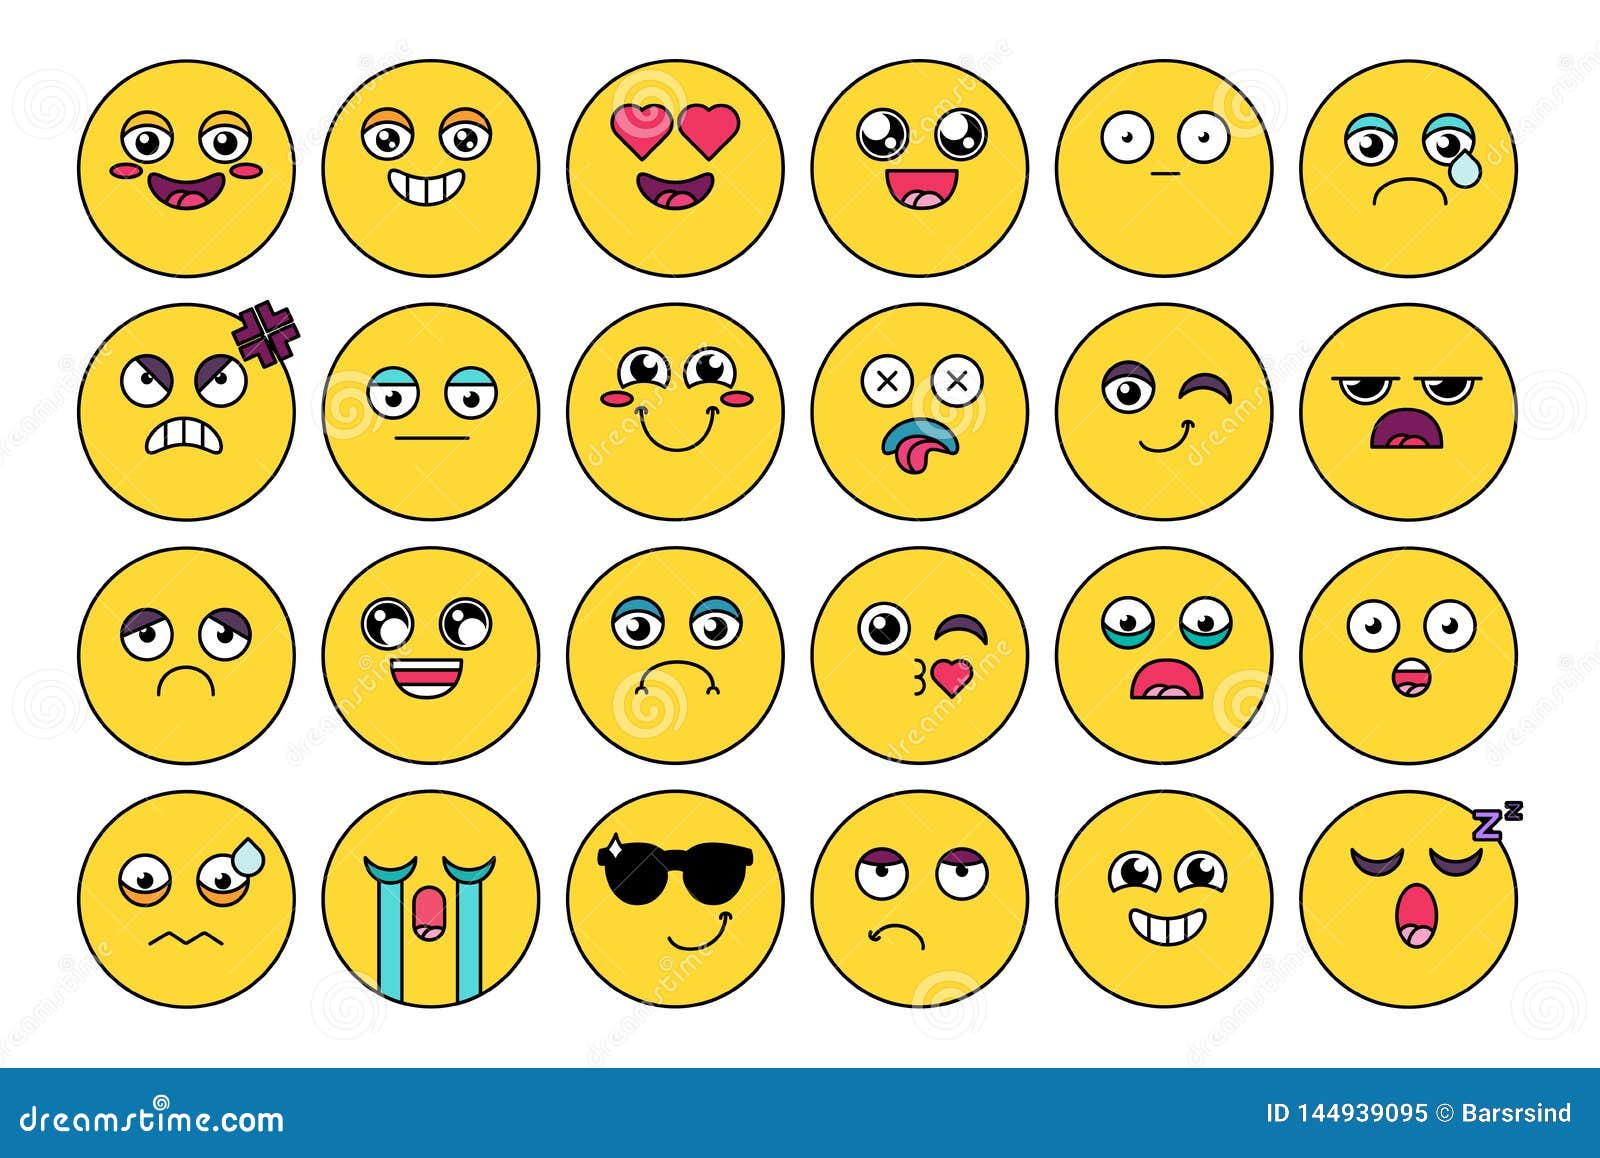 Comic Cute Emoji Sticker Pack Stock Vector Illustration Of Emotion Graphic